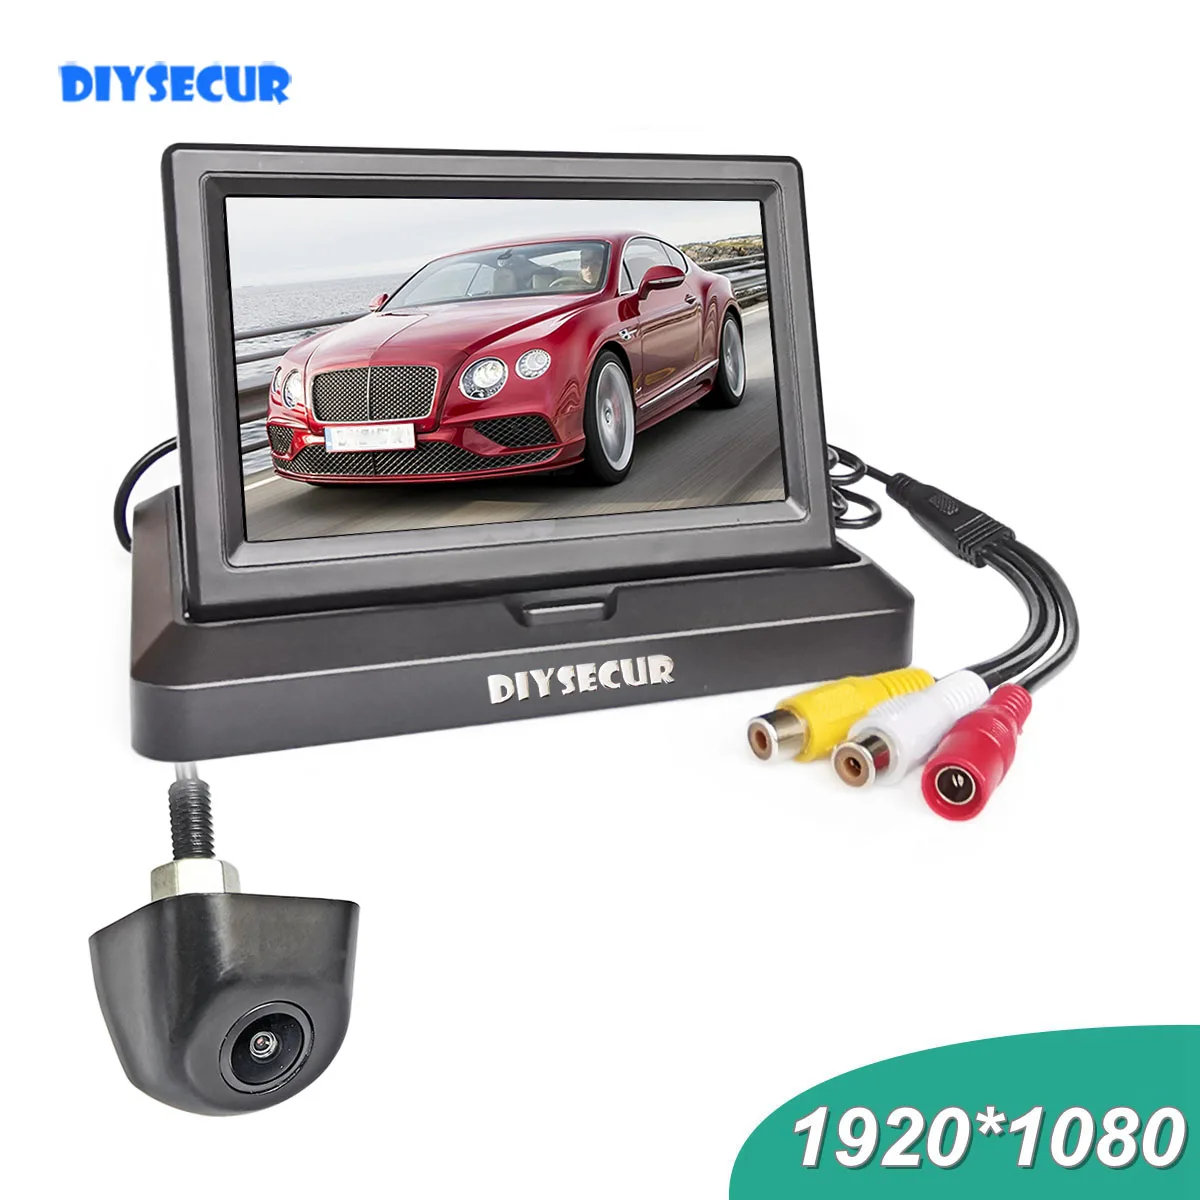 

DIYSECUR 5" 1024x600 IPS AHD Car Monitor 1920*1080P HD 170 Degree Starlight Night Vision Vehicle Camera Reverse for Car SUV MPV